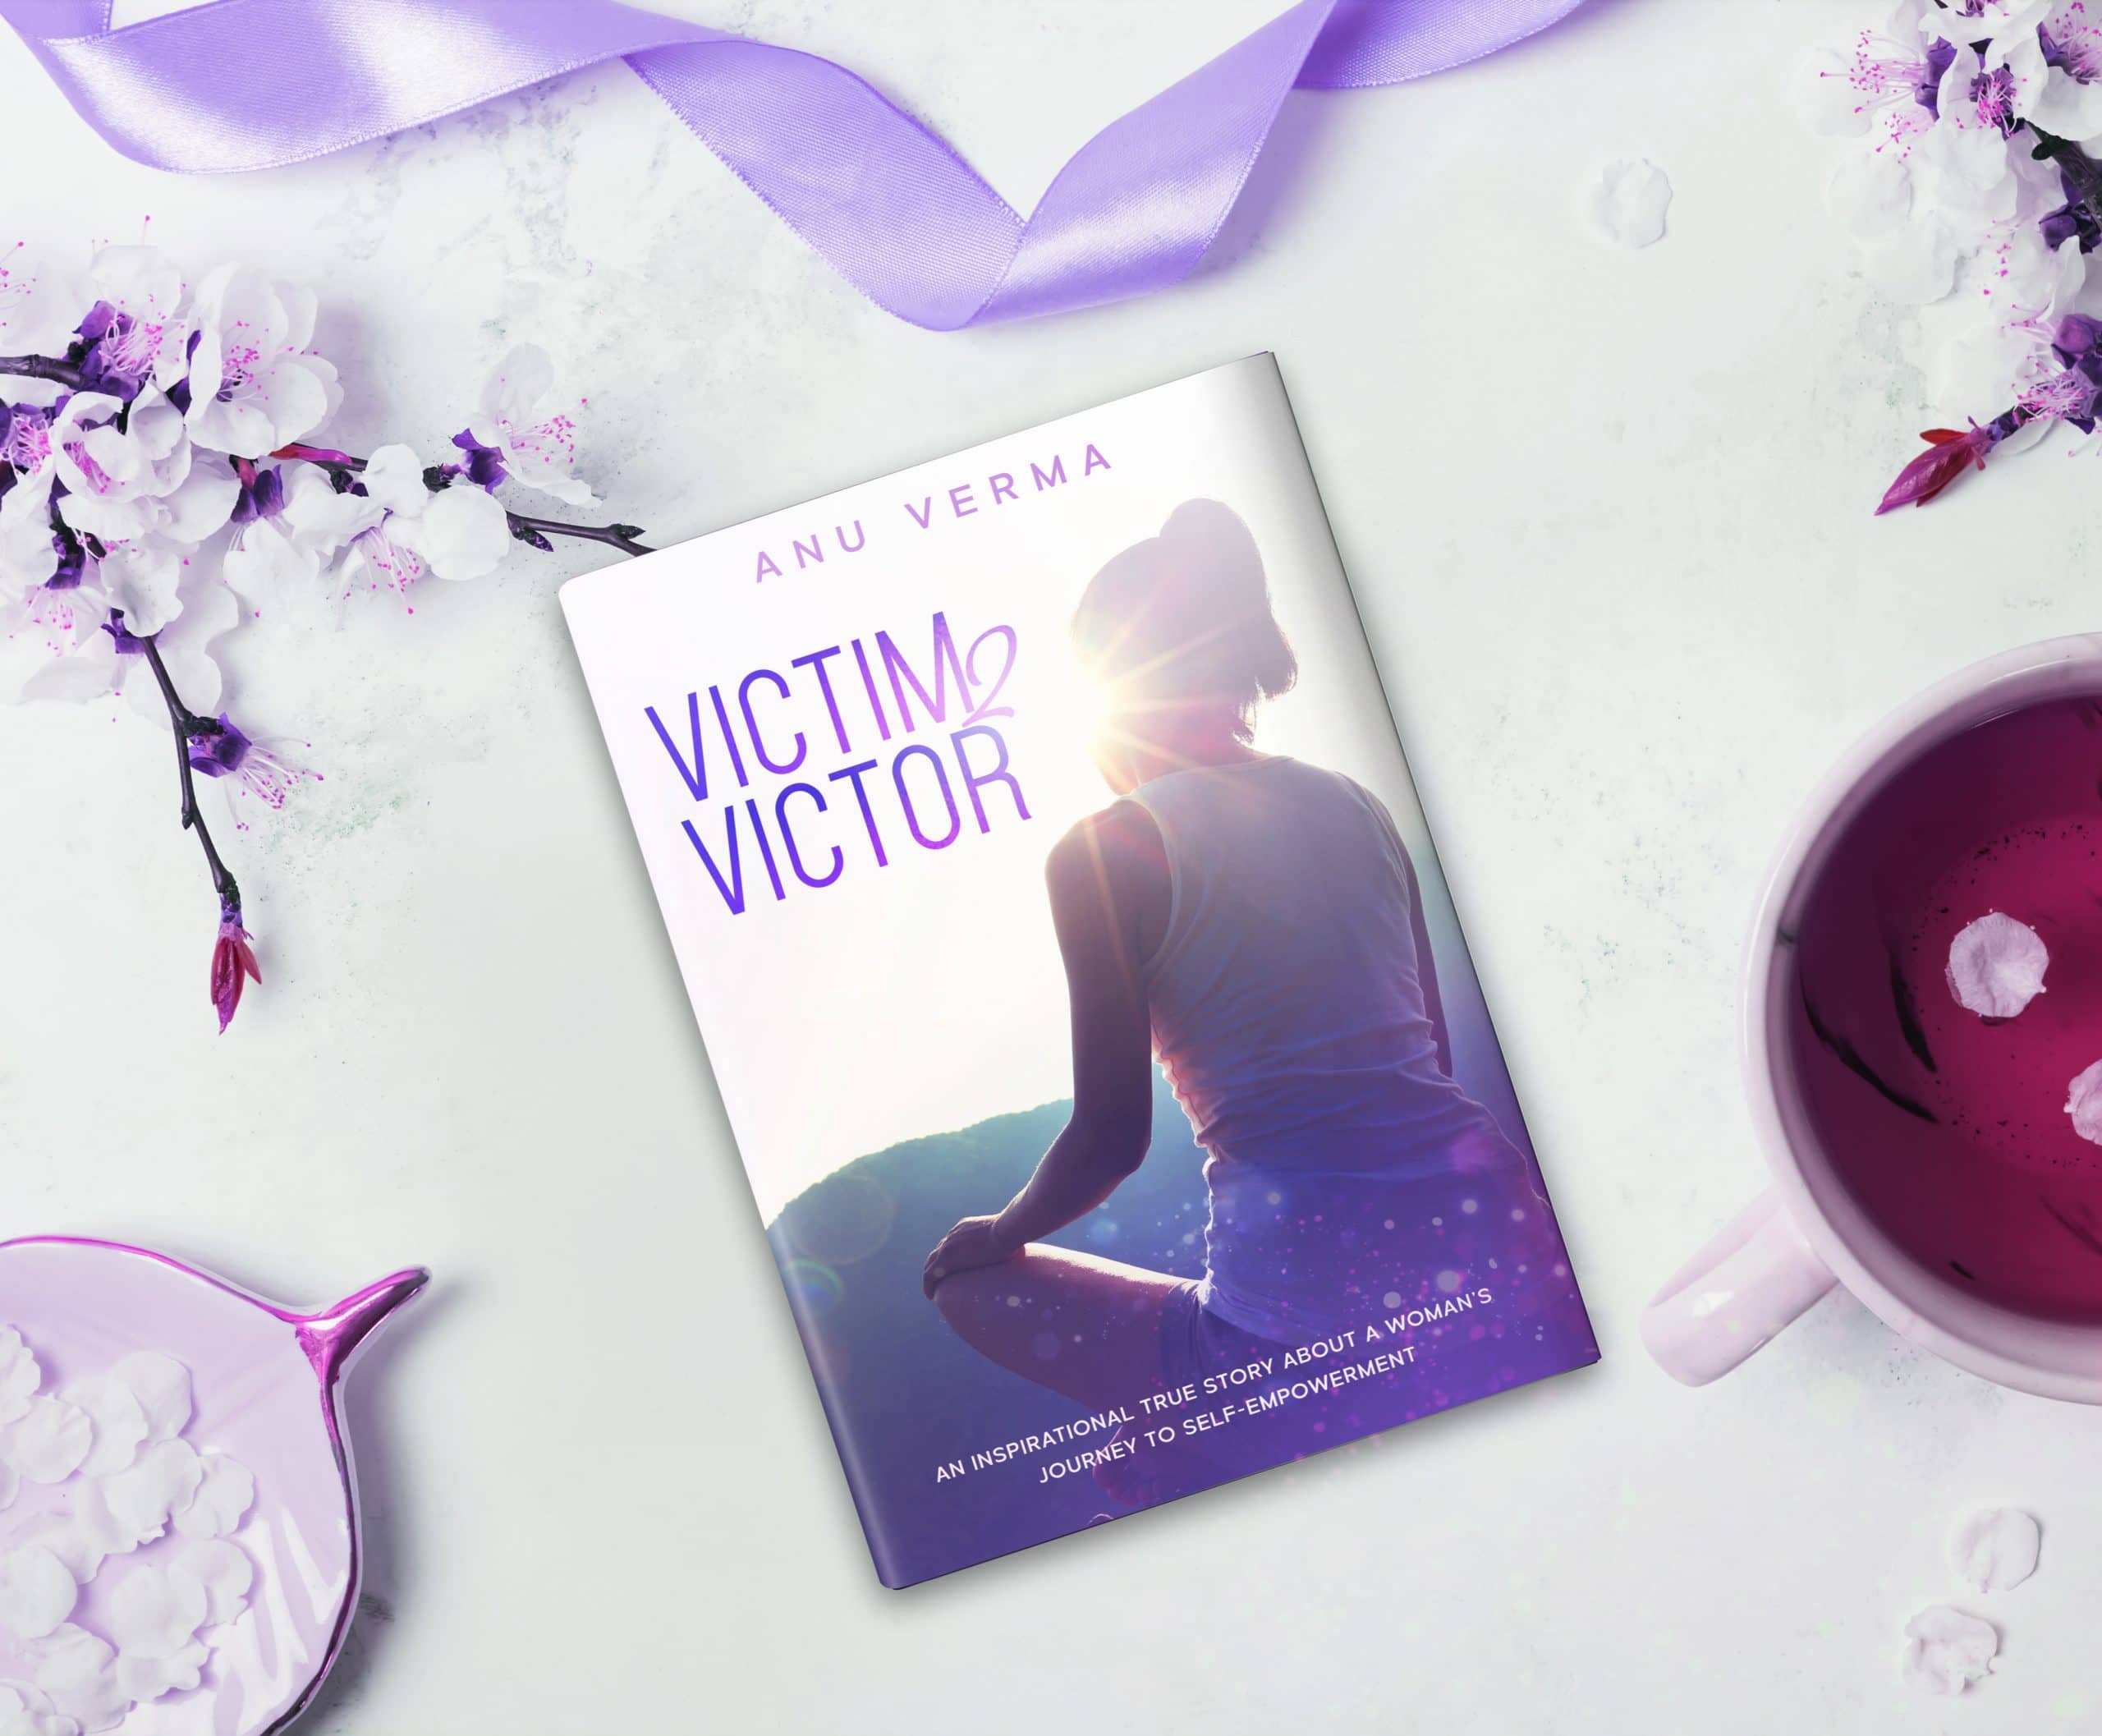 About Anu Verma Memoir | Victim 2 Victor